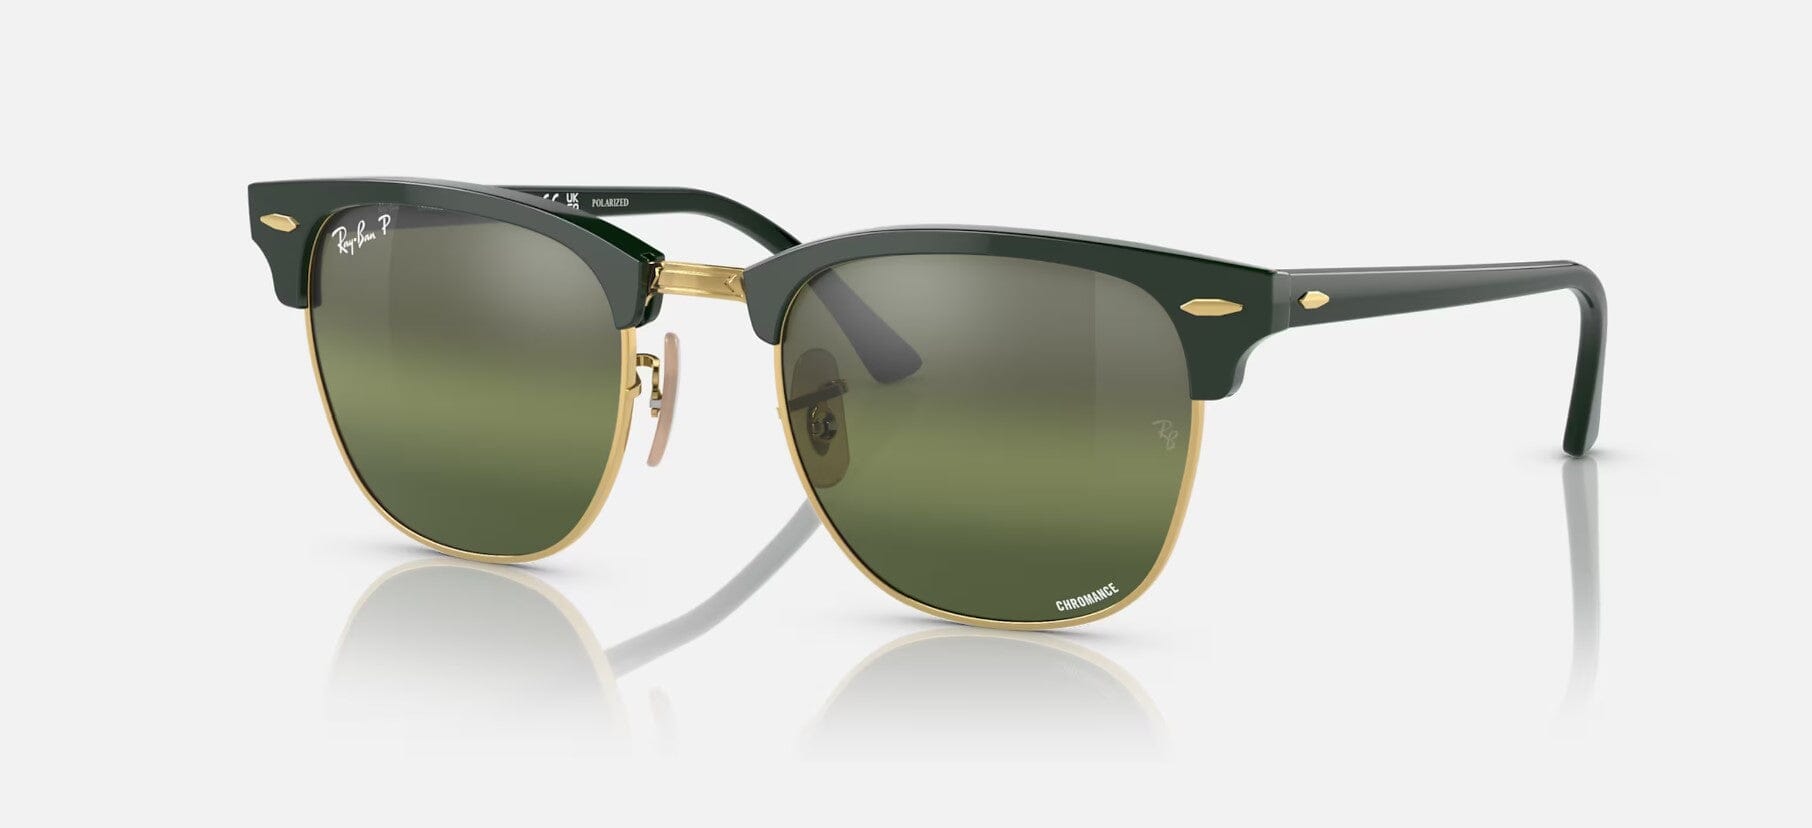 RAY-BAN Clubmaster Chromance Green On Arista - Dark Green Mirror Polarized Sunglasses Sunglasses Ray-Ban 